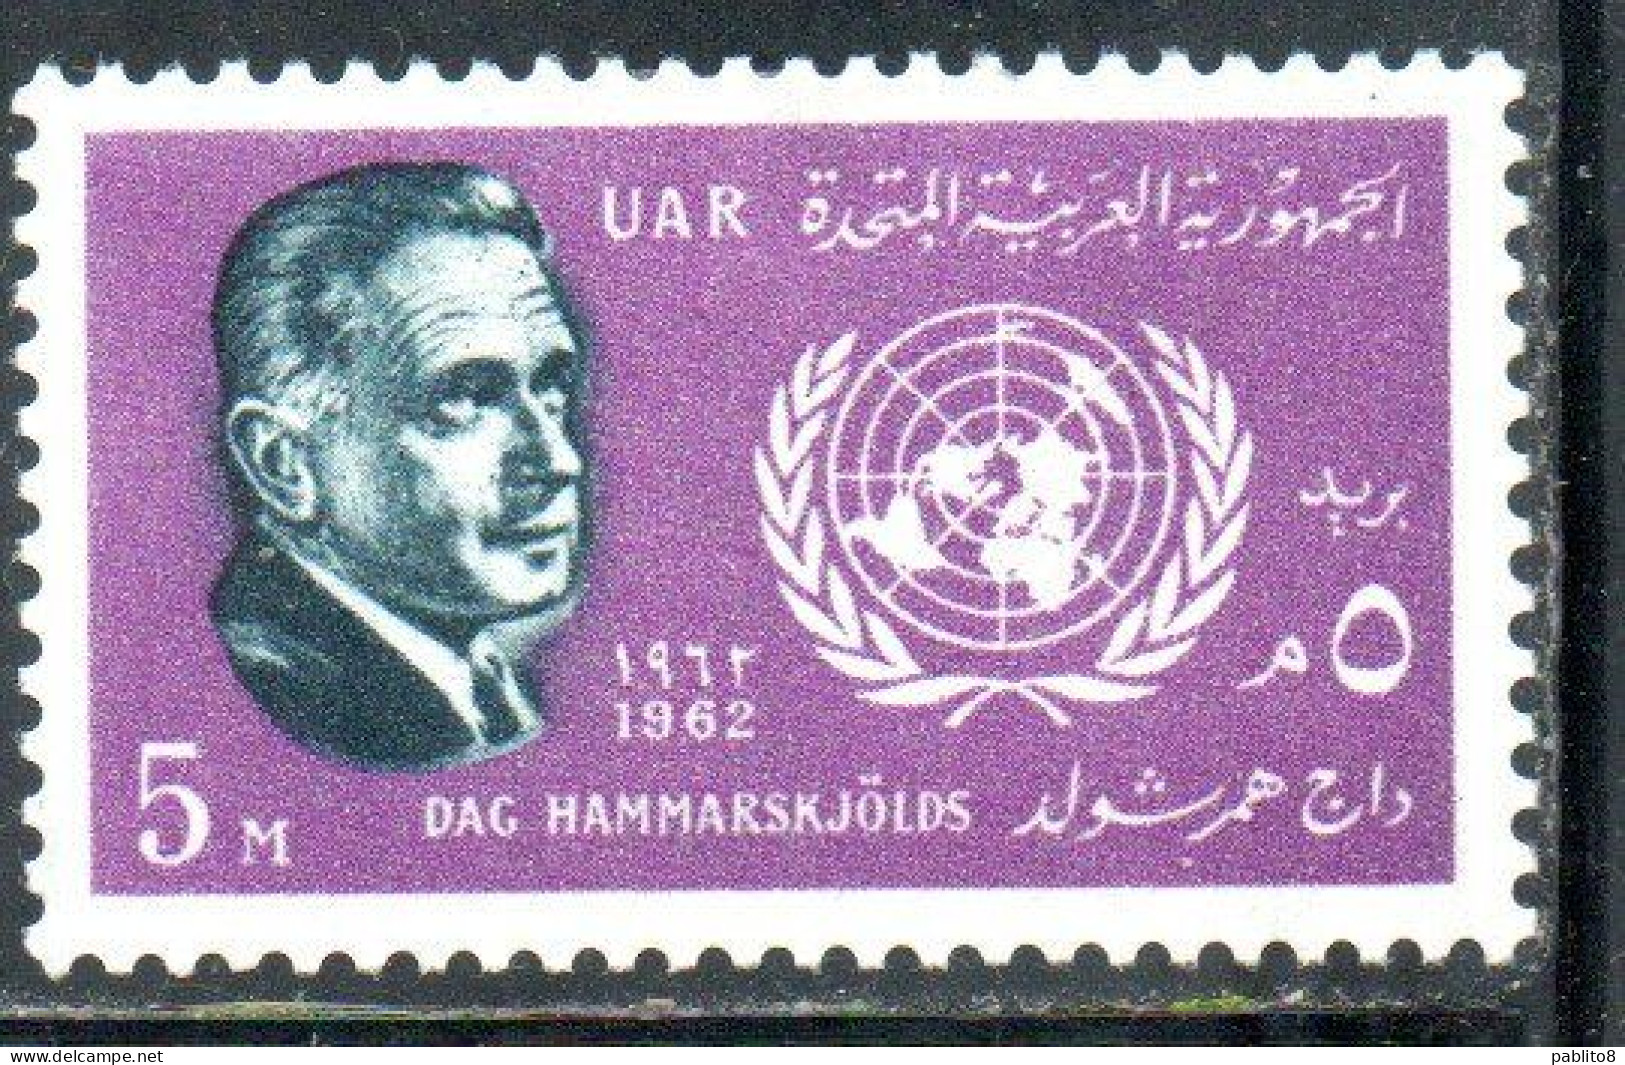 UAR EGYPT EGITTO 1962 DAG HAMMARSKJOLD SECRETARY GENERAL OF THE UN ONU 5m MH - Ungebraucht